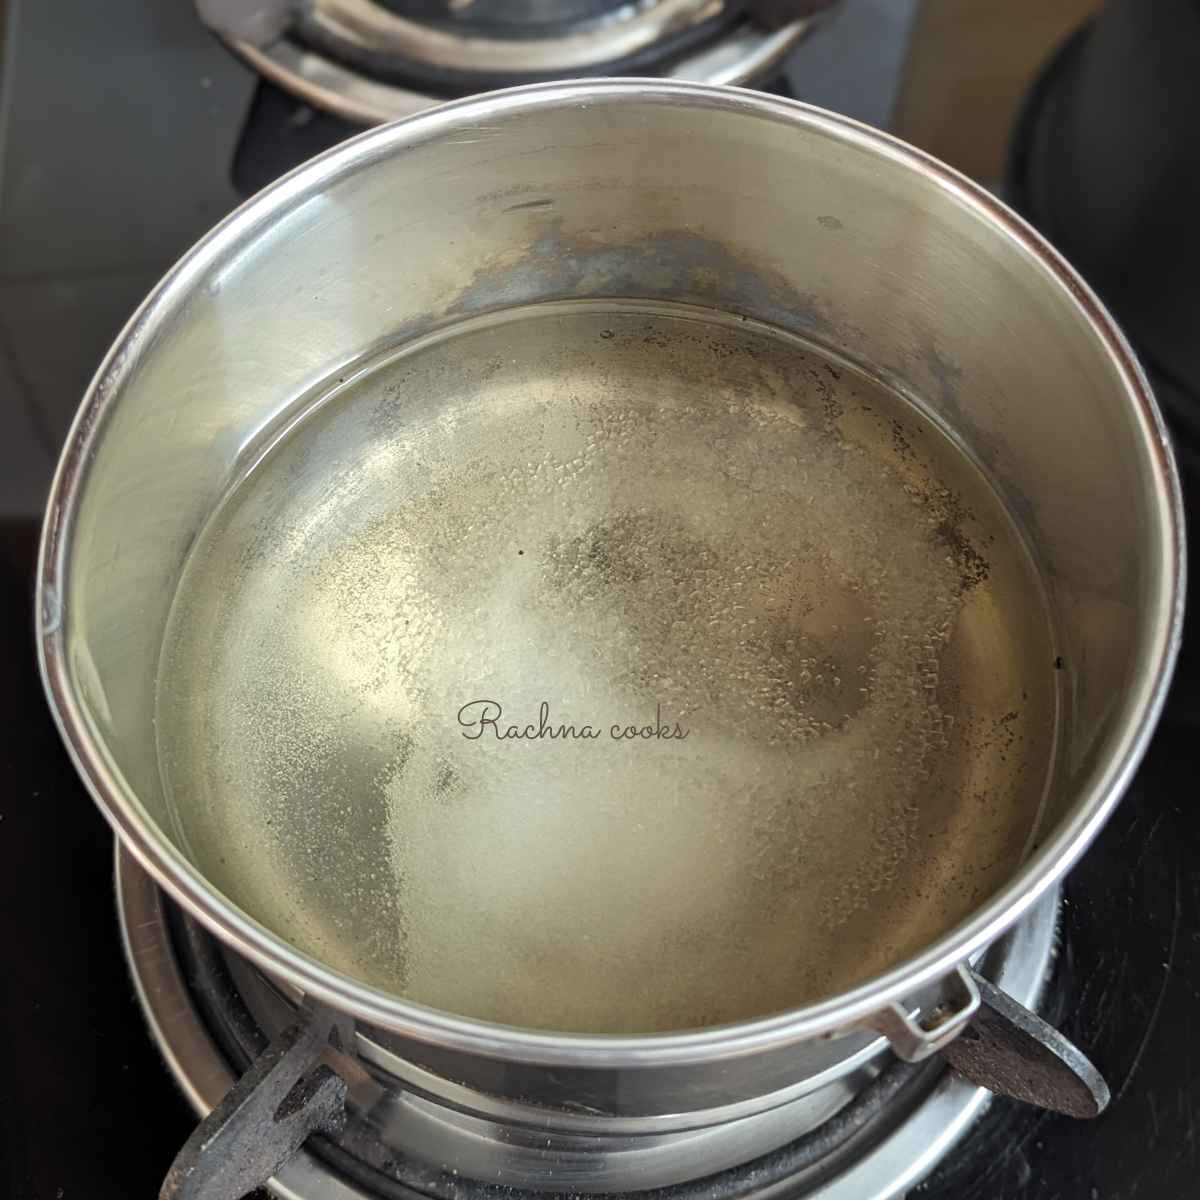 Preparing pickling liquid in a pan.